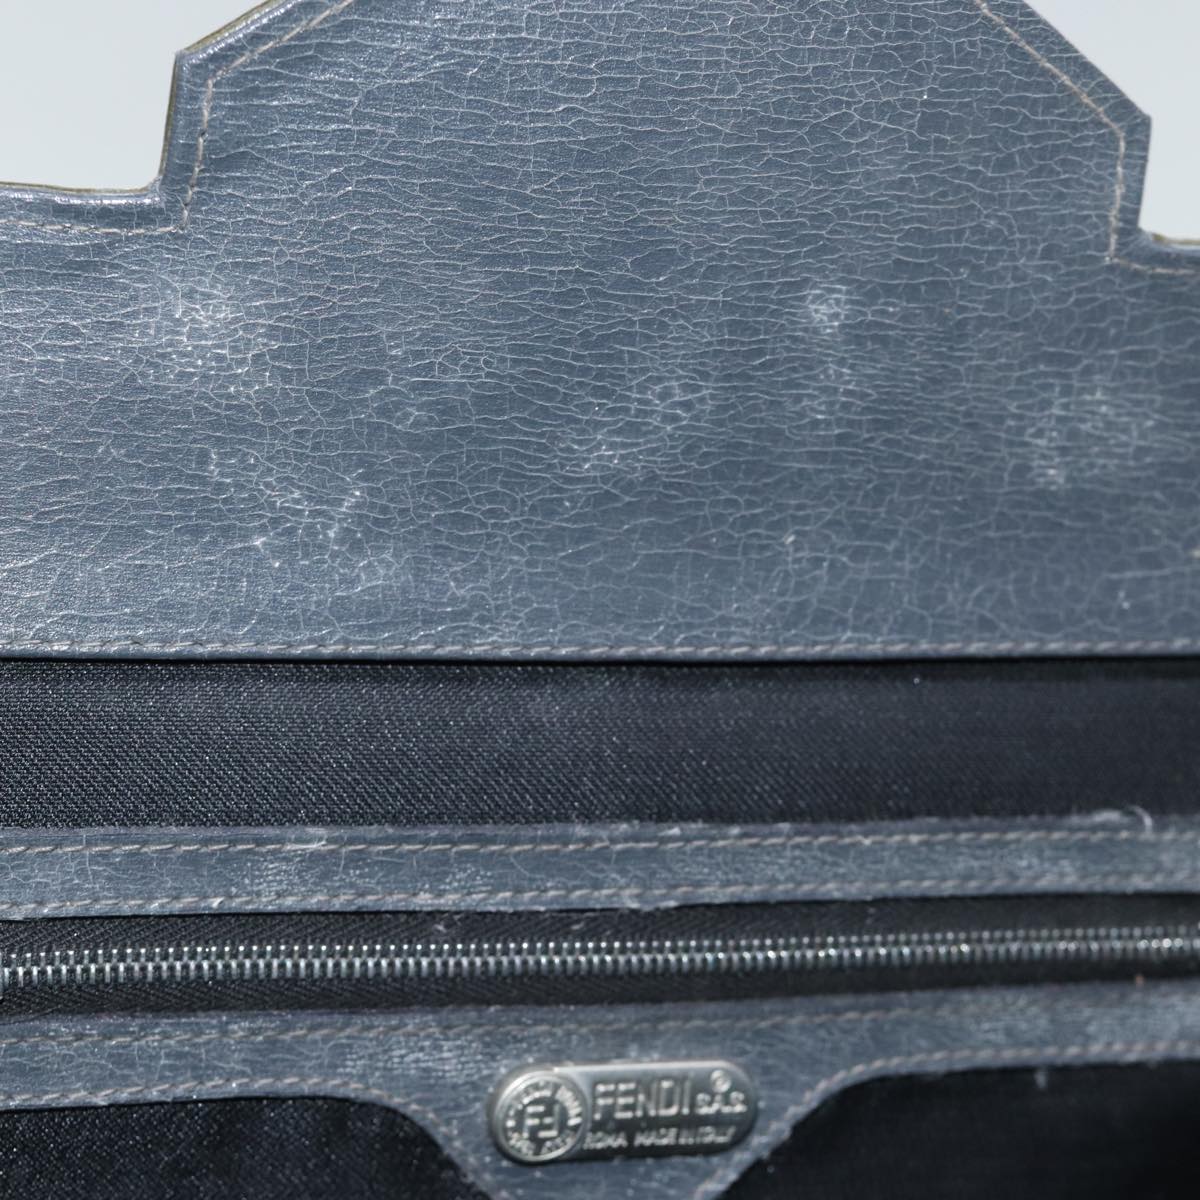 FENDI Vanity Hand Bag Leather Khaki Auth 73352